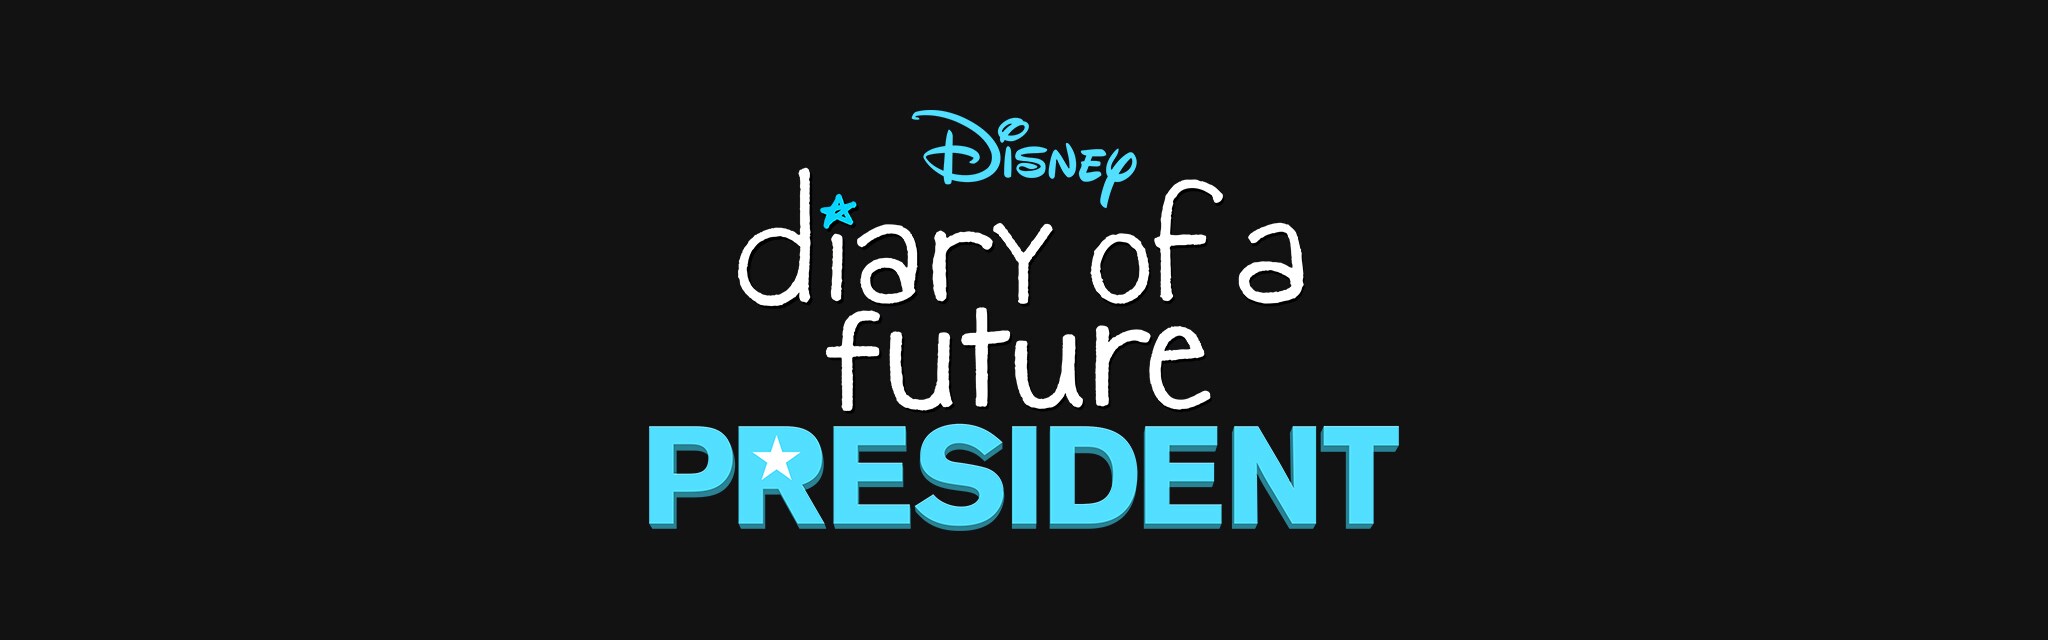 Disney Diary of a Future President